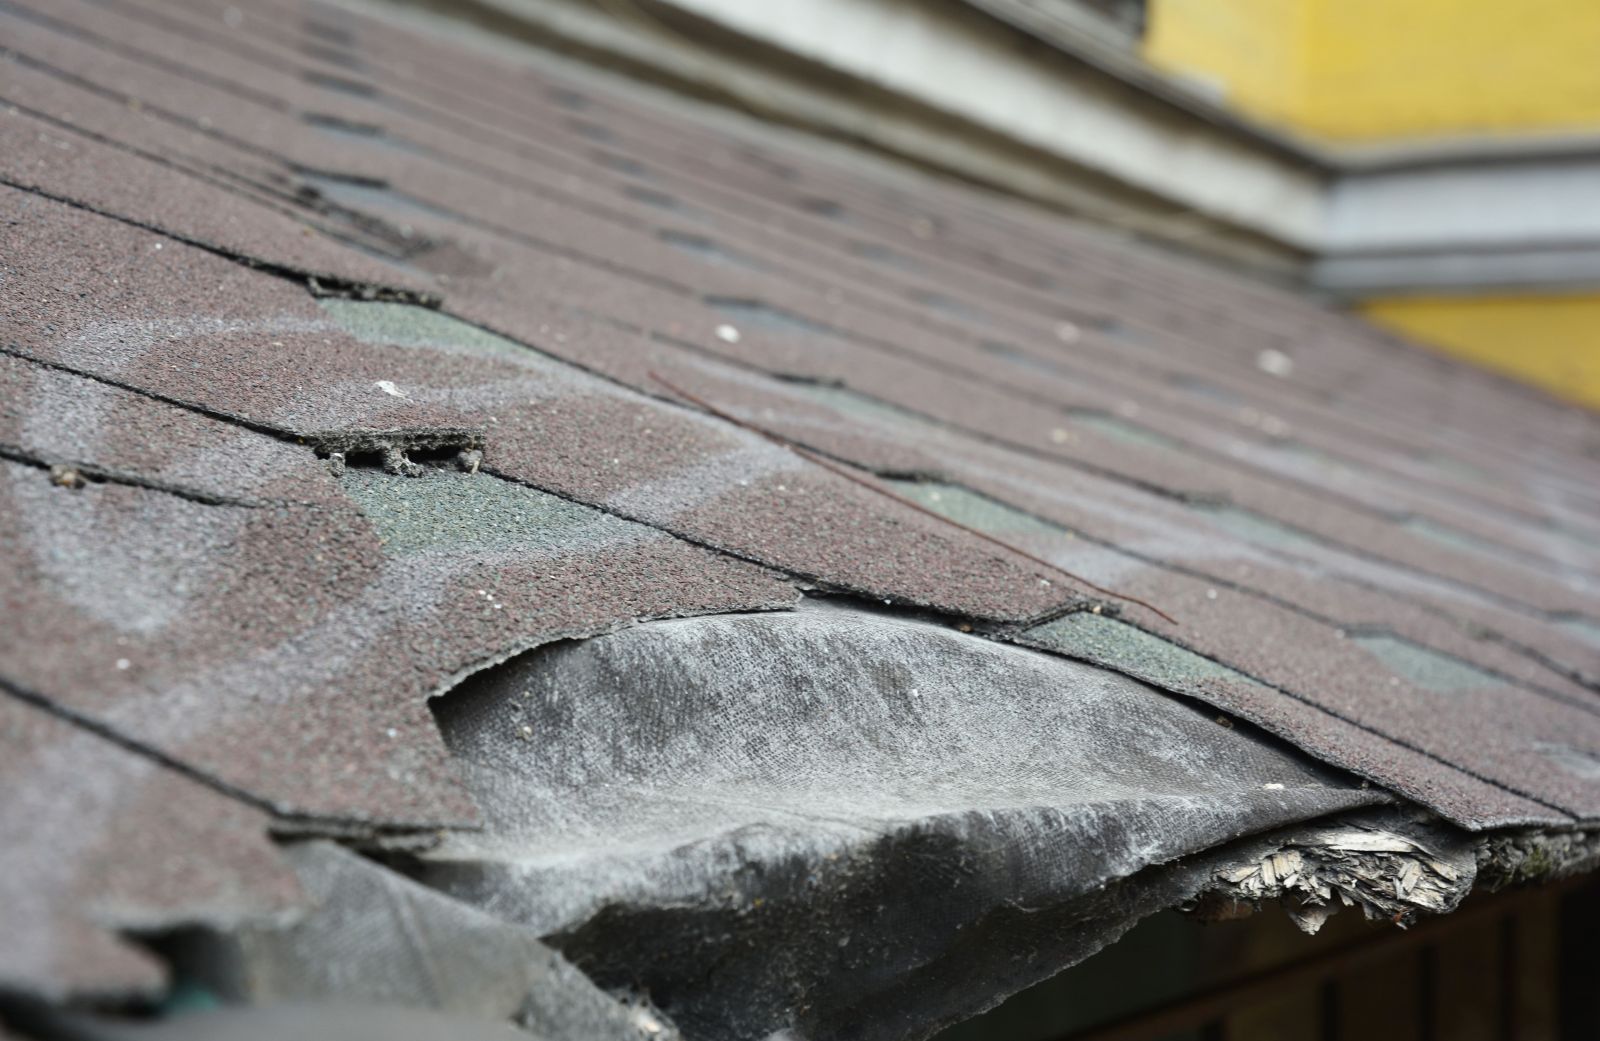 Maryland Roofing, Siding & Windows, LLC Images